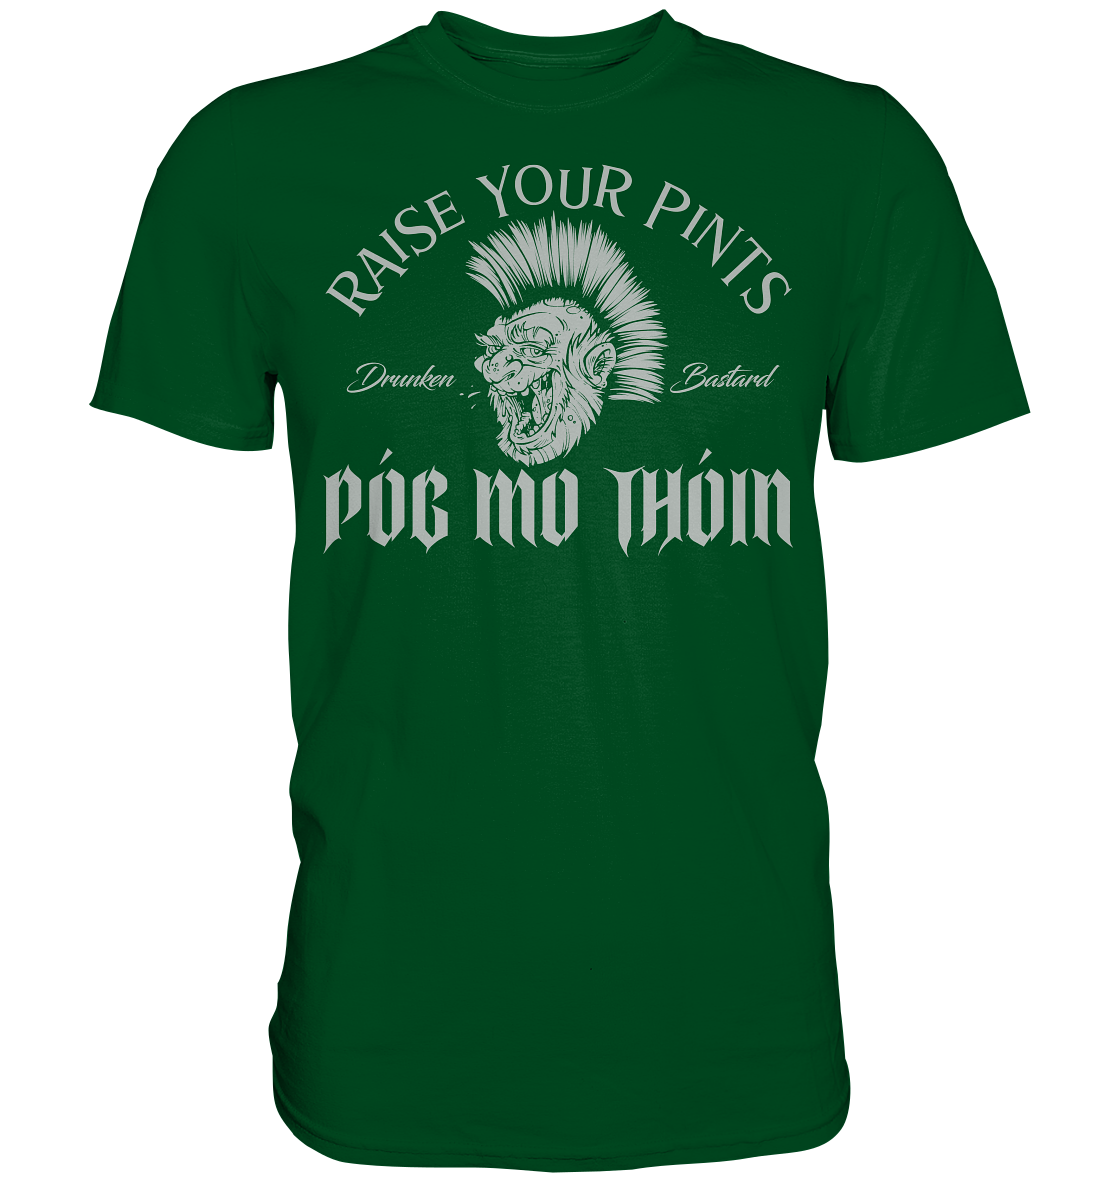 Póg Mo Thóin Streetwear "Drunken Bastard" - Premium Shirt